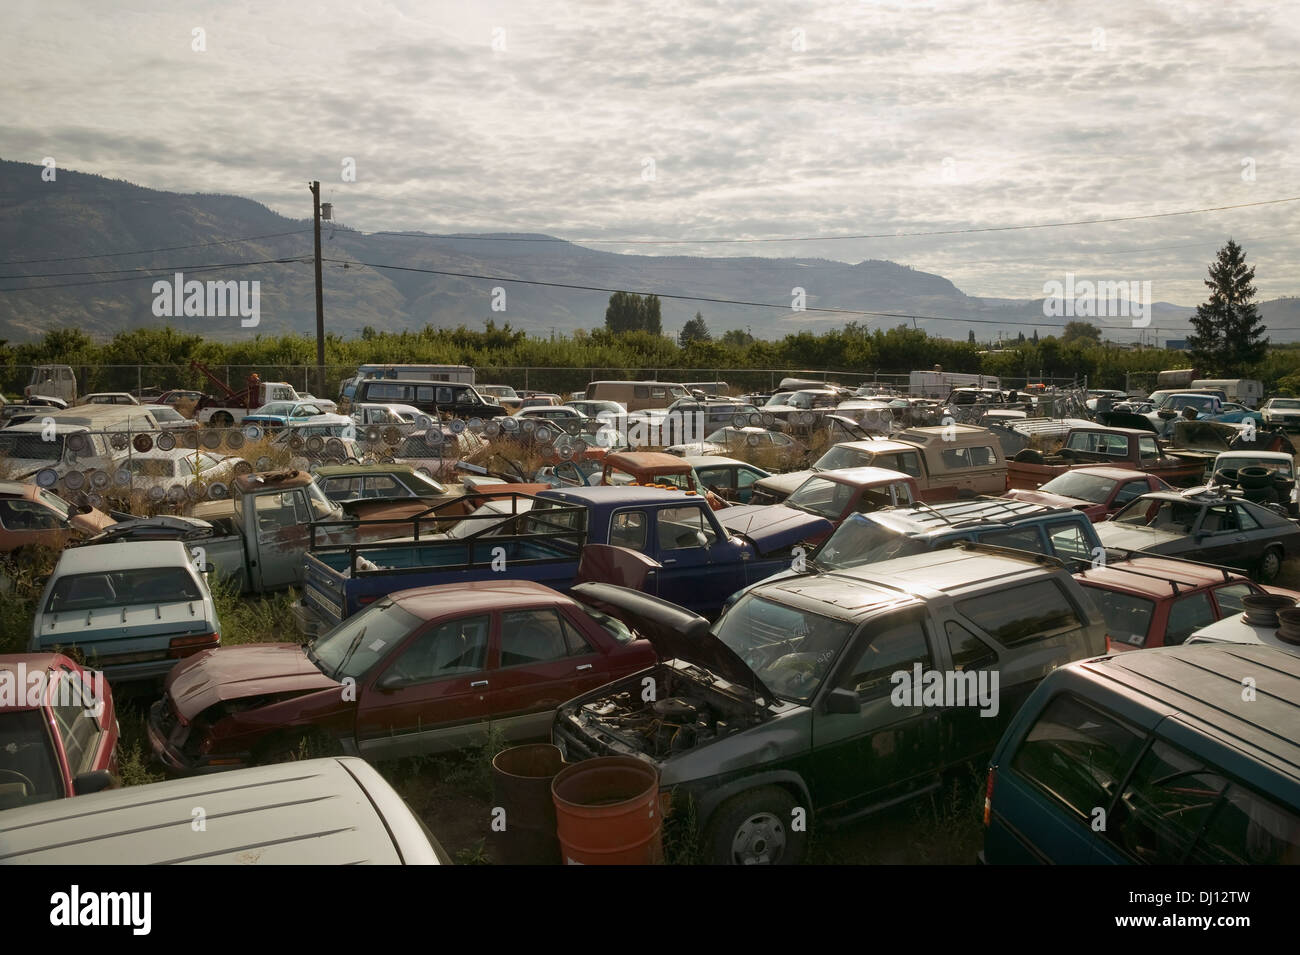 Cars In Junkyard; British Columbia, Canada Stock Photo - Alamy